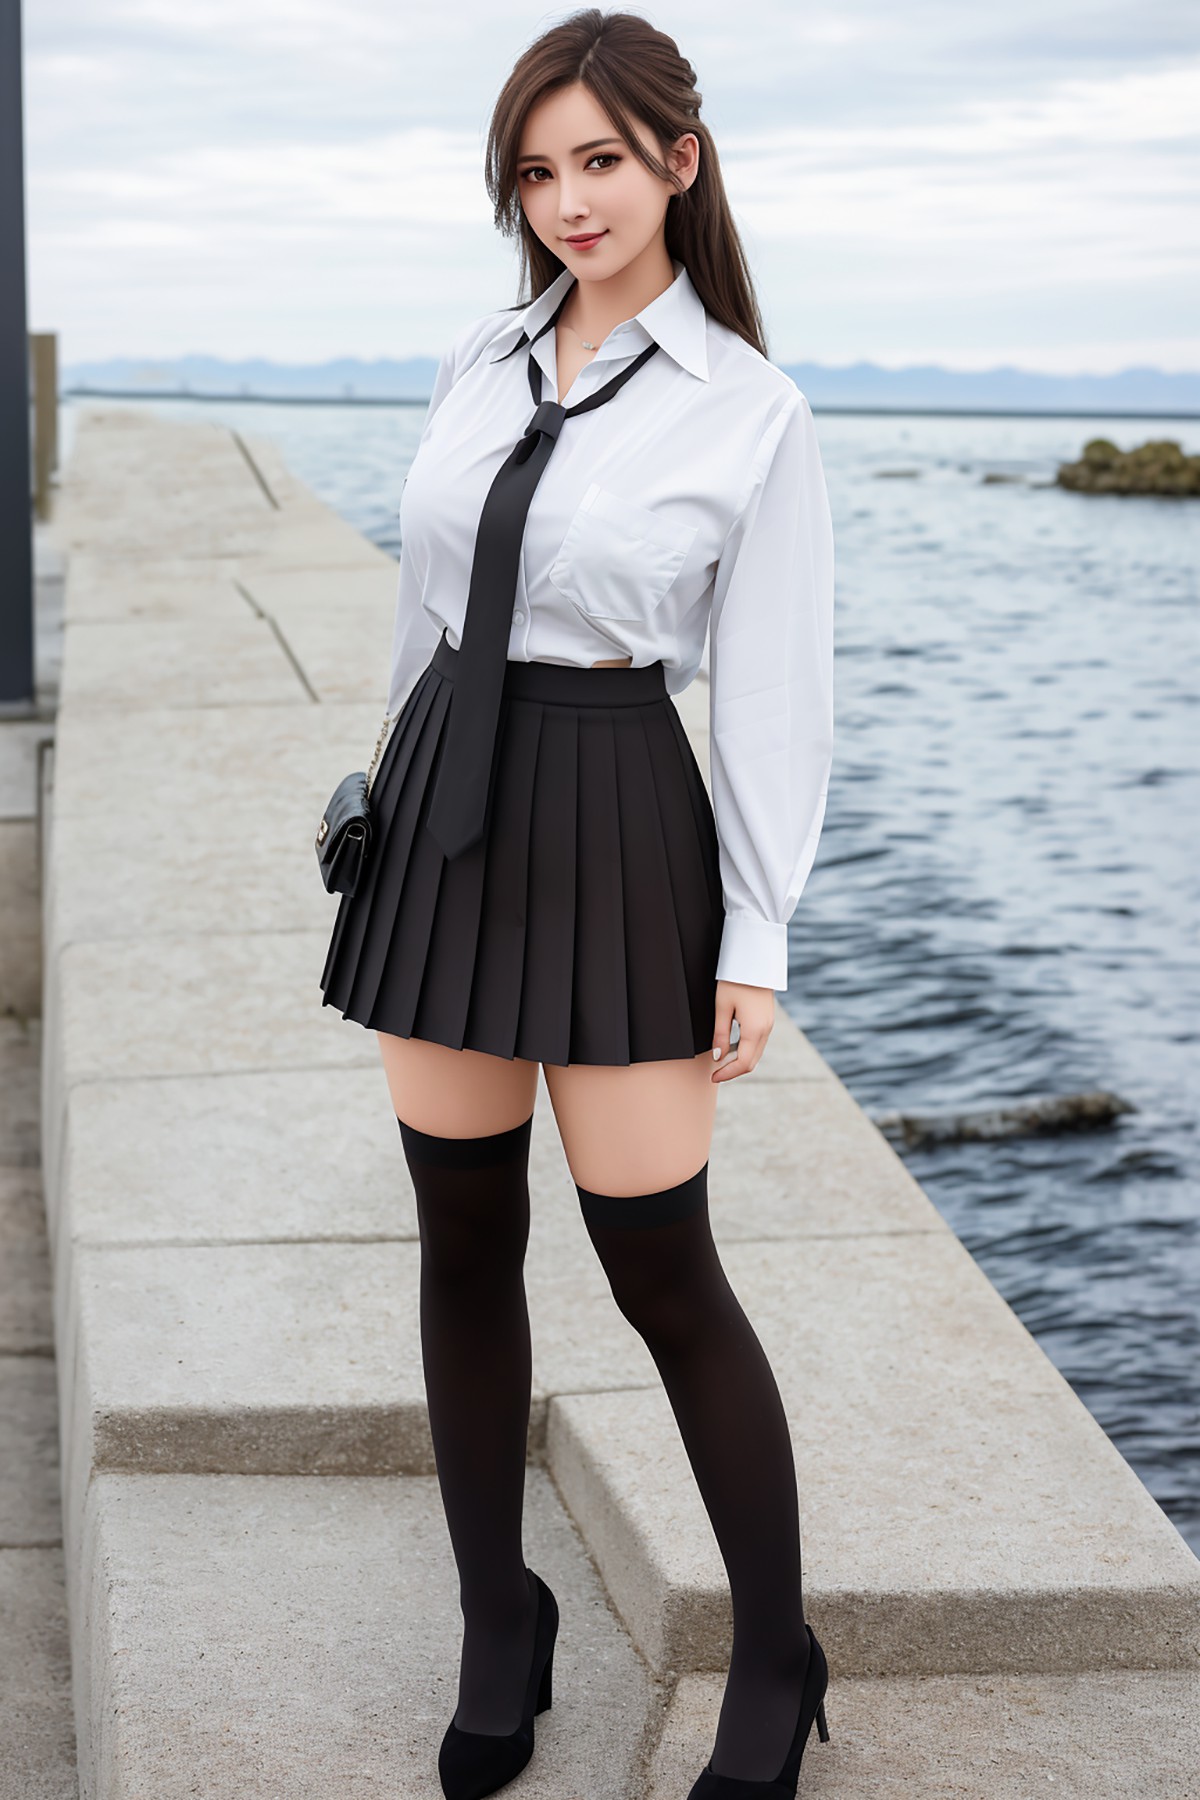 AIModel Vol 133 Sexy White Shirt With Black Short Skirt 0019 1609110847.jpg